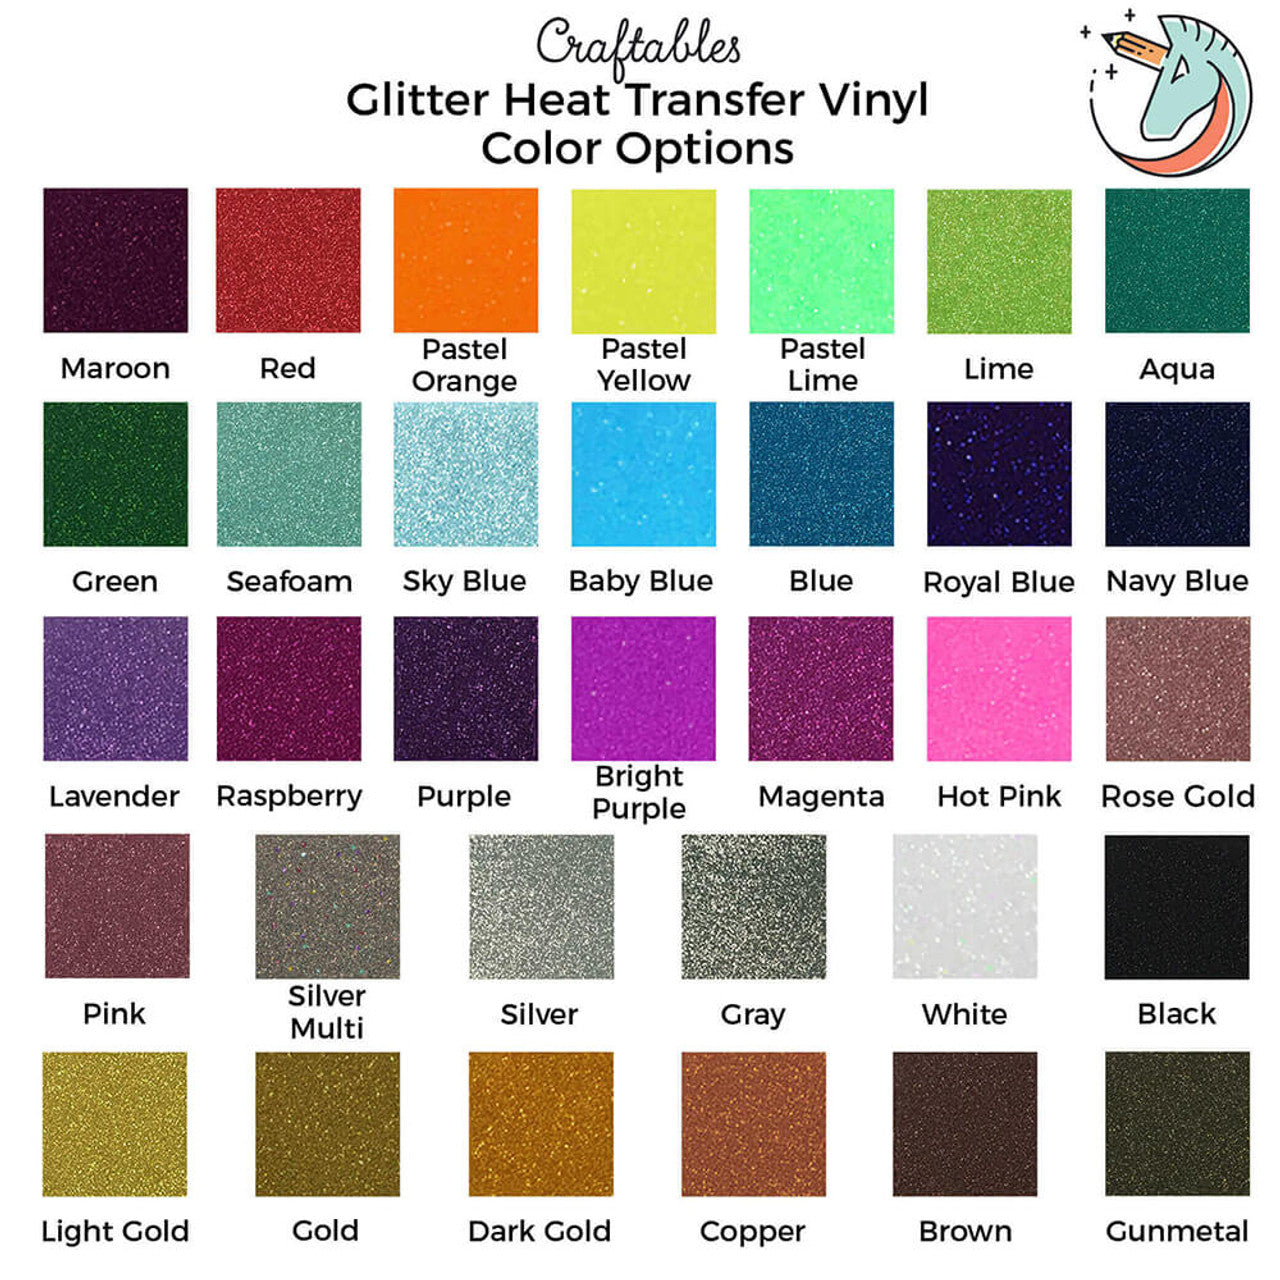 Copper Glitter Heat Transfer Vinyl Sheets By Craftables